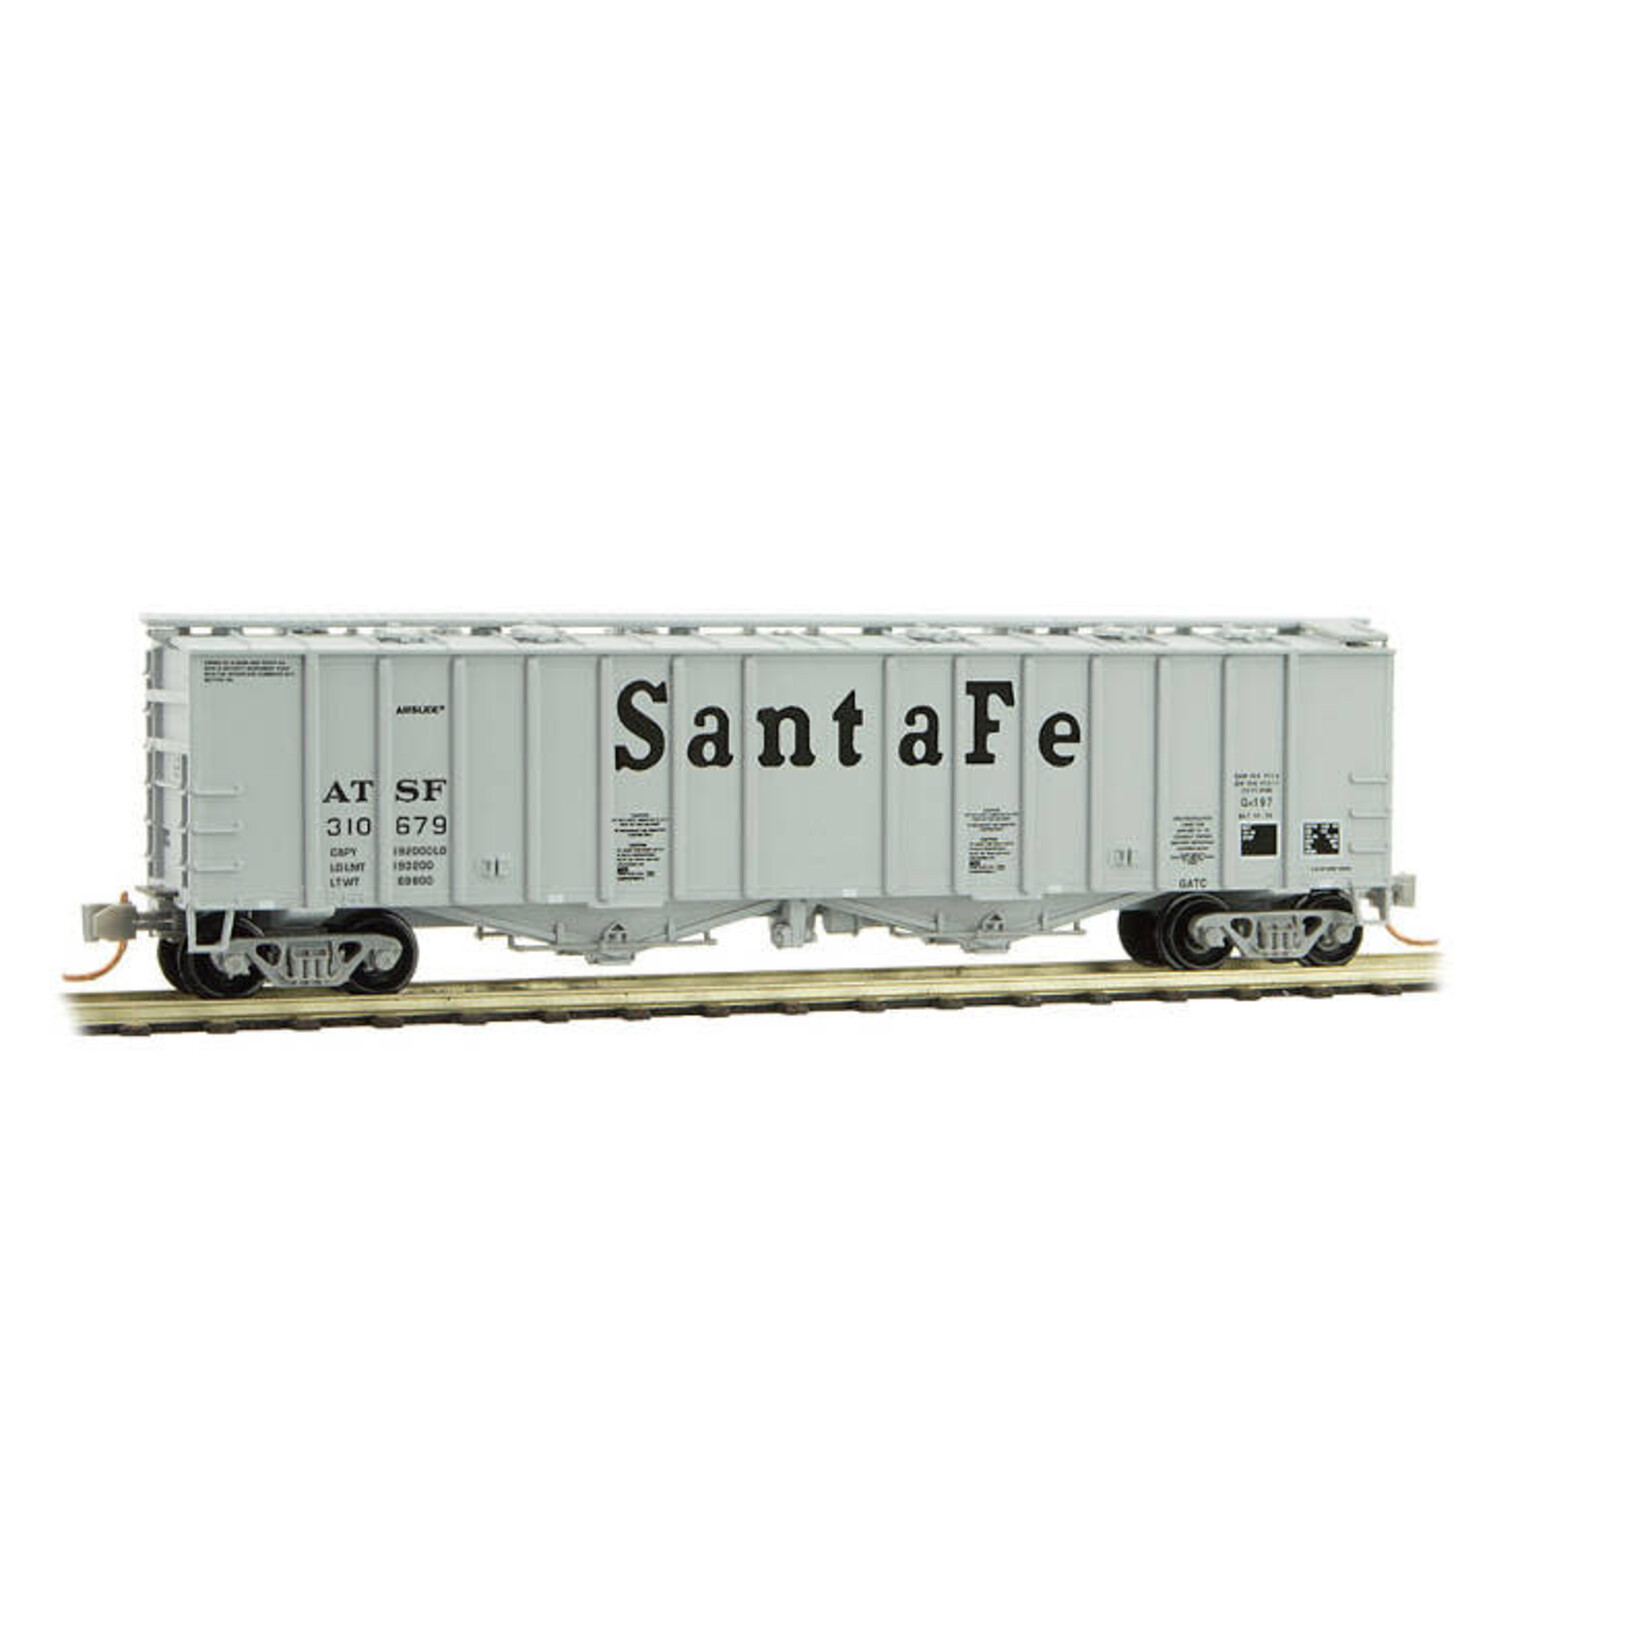 Micro Trains Line 09800092 N Atchison Topeka & Santa Fe - Rd 310679